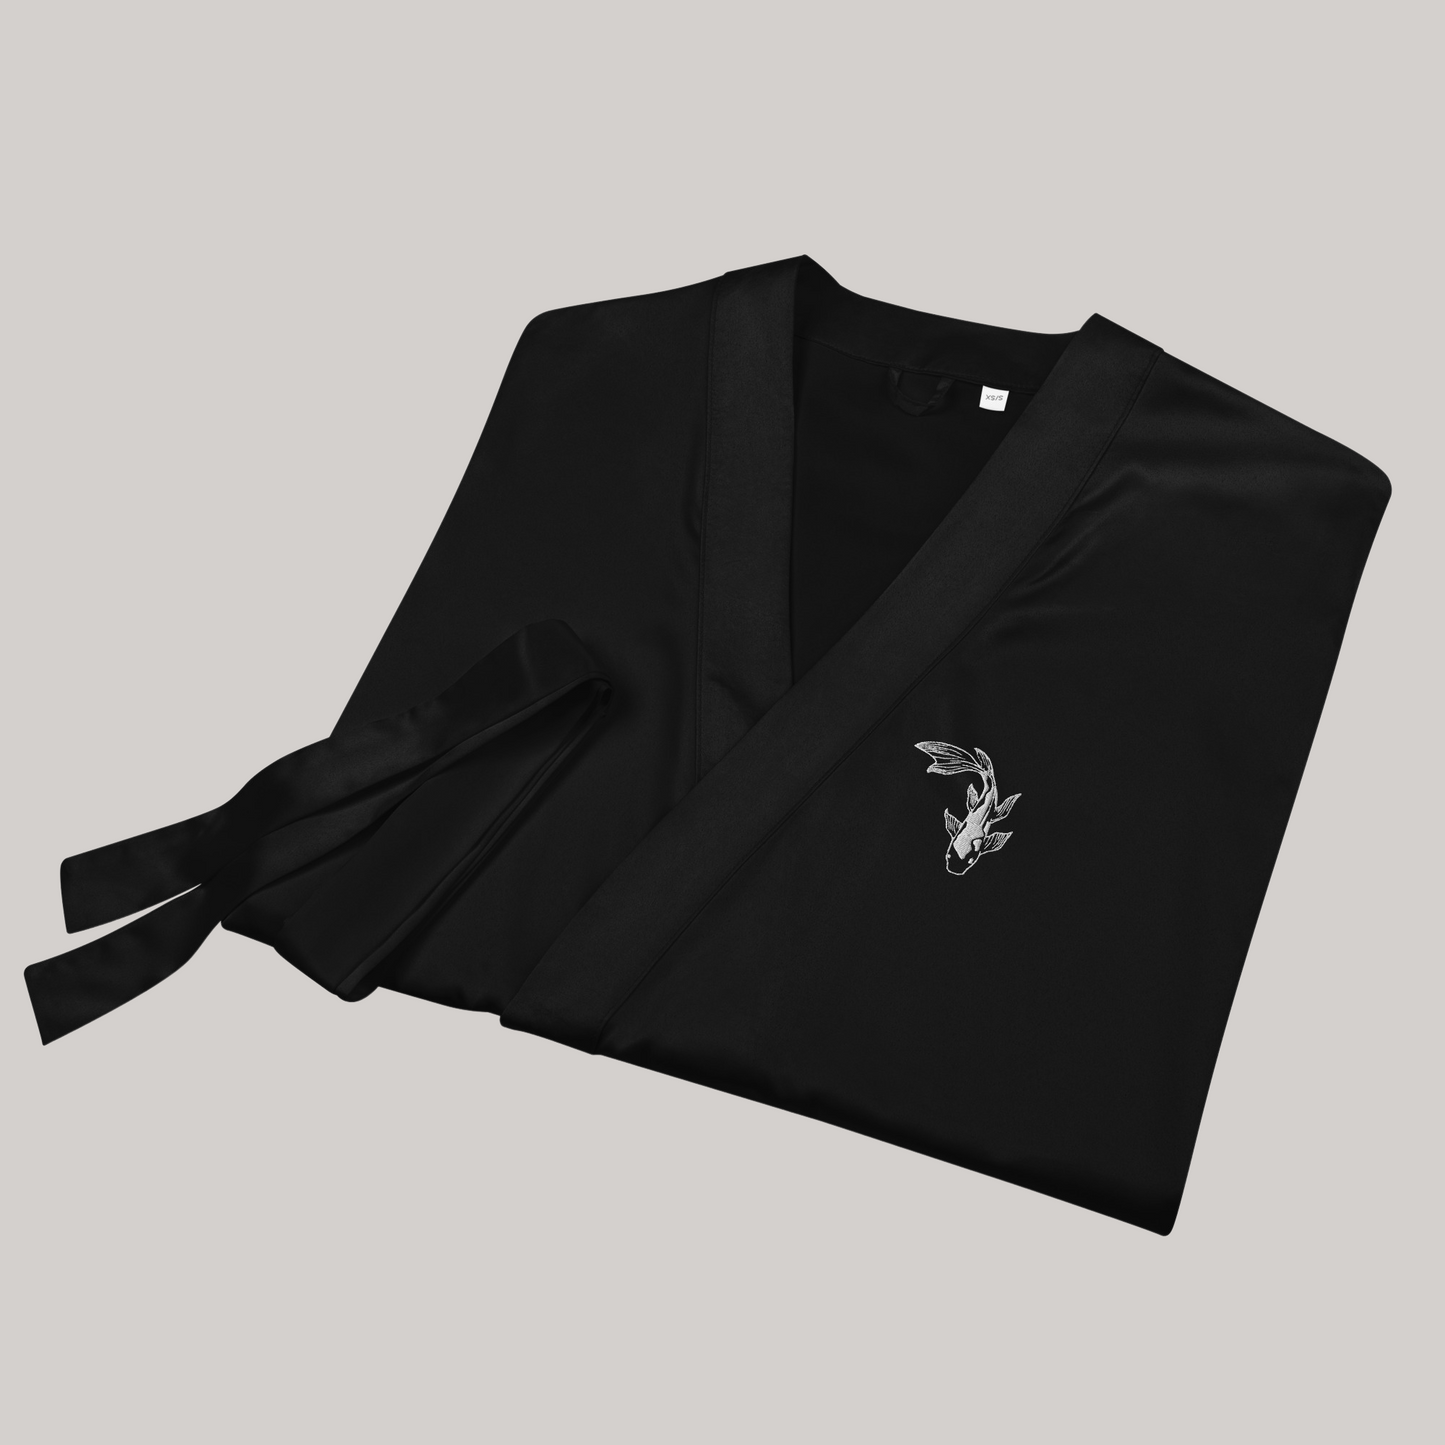 satin robe black kimono folded minimalistic koi fish art embroidered tie belt premium asian prestige 